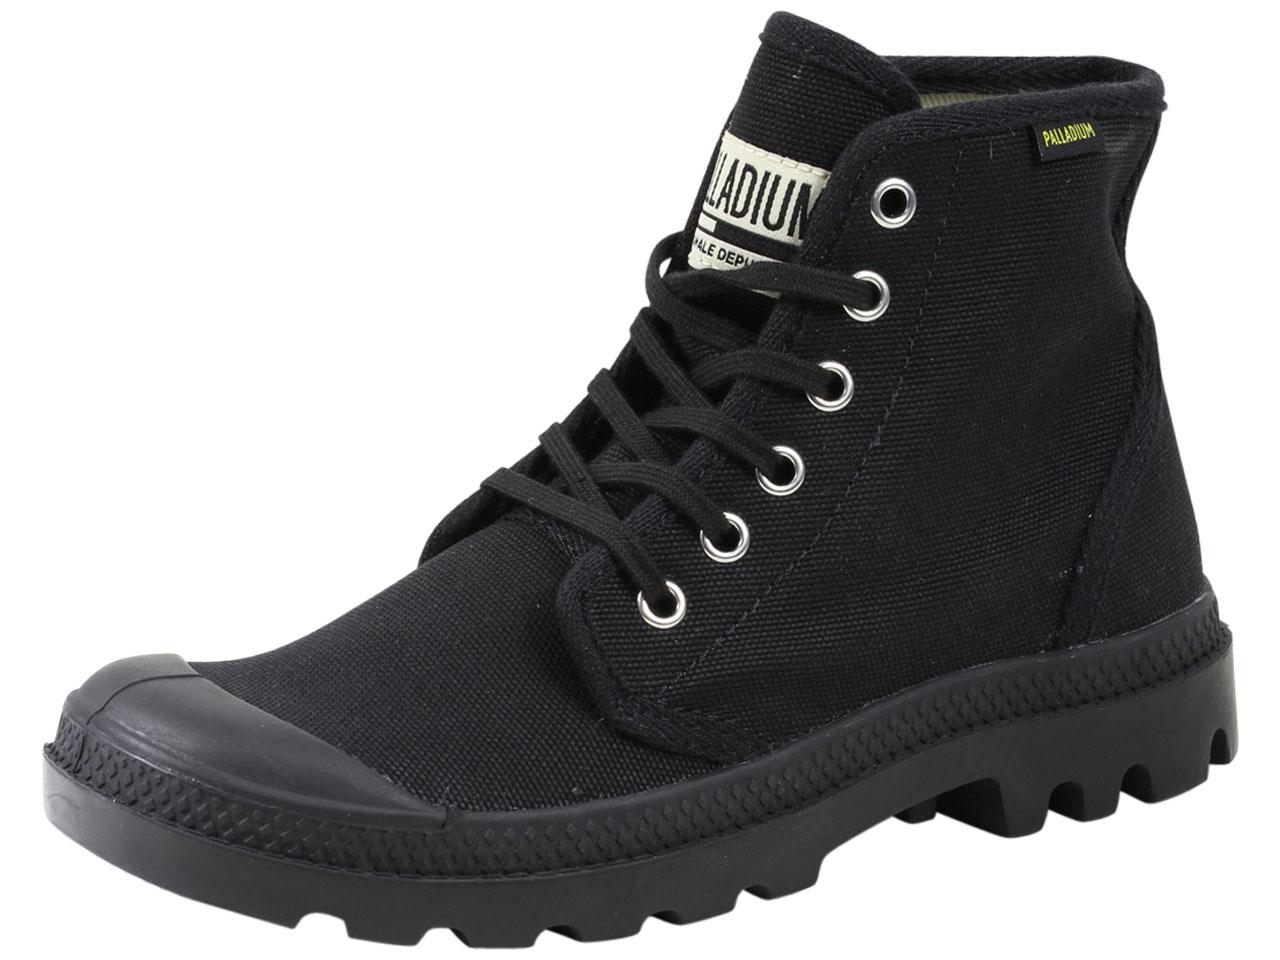 Palladium Men's Pampa Hi Originale Chukka Boots Shoes - Black - 4.5 D(M) US/6 B(M) US